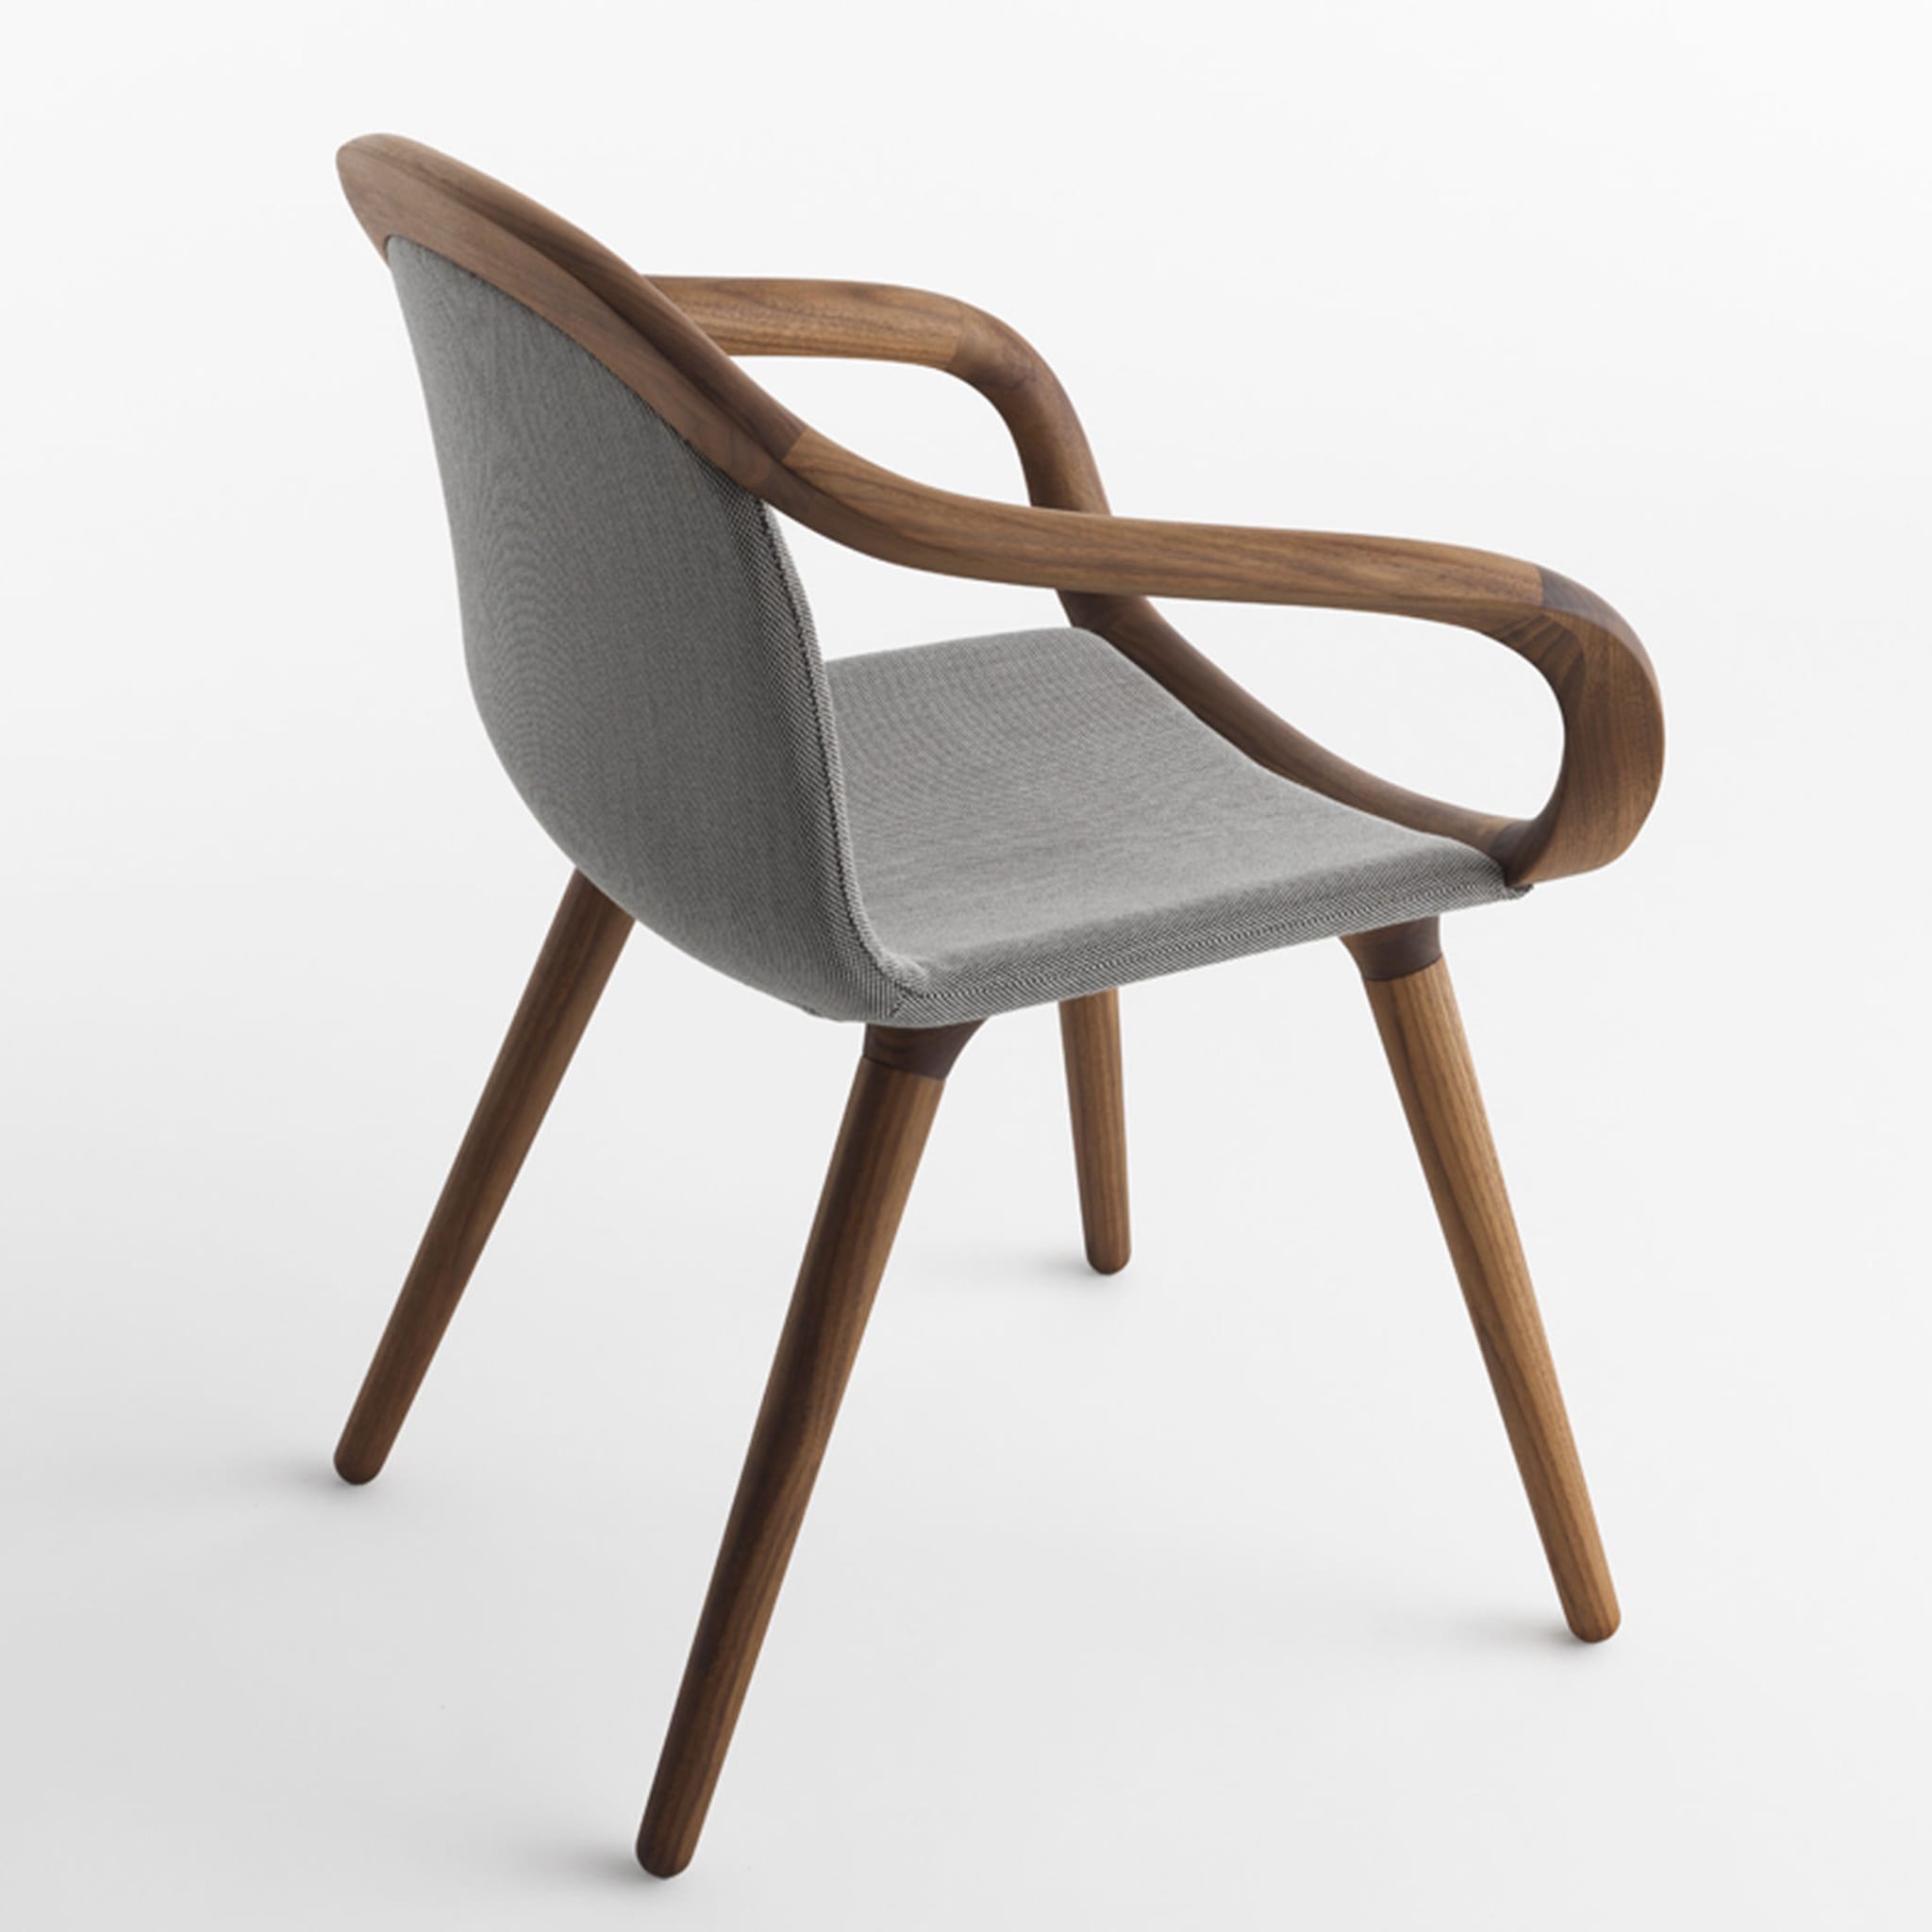 Ginevra Chair by Studio Balutto - Alternative view 3